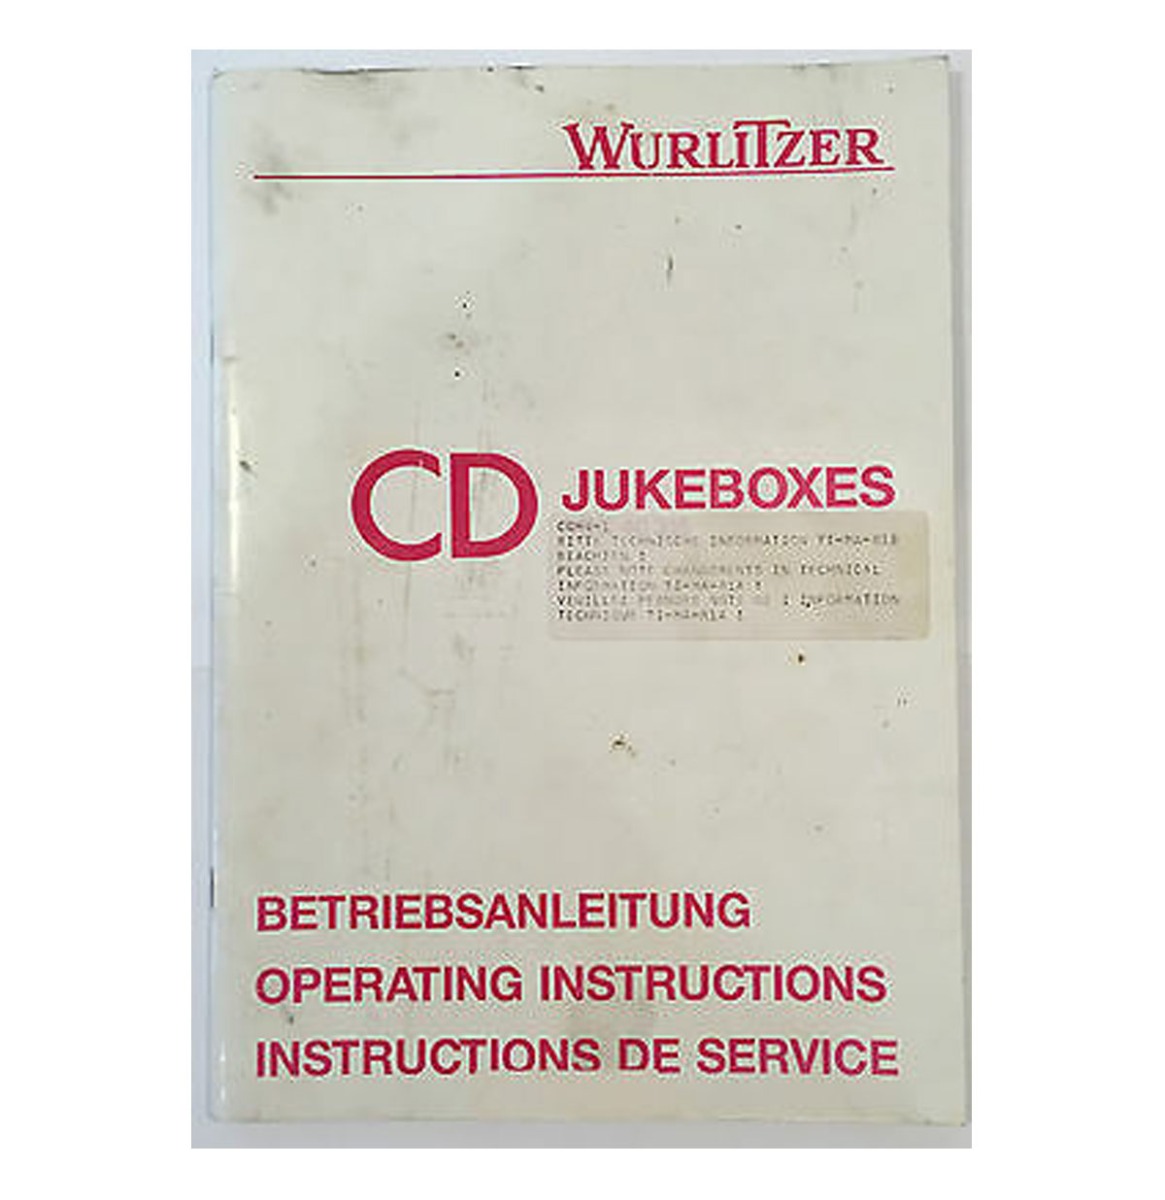 Wurlitzer CD Jukeboxes Operating Instructions SCC 40 315